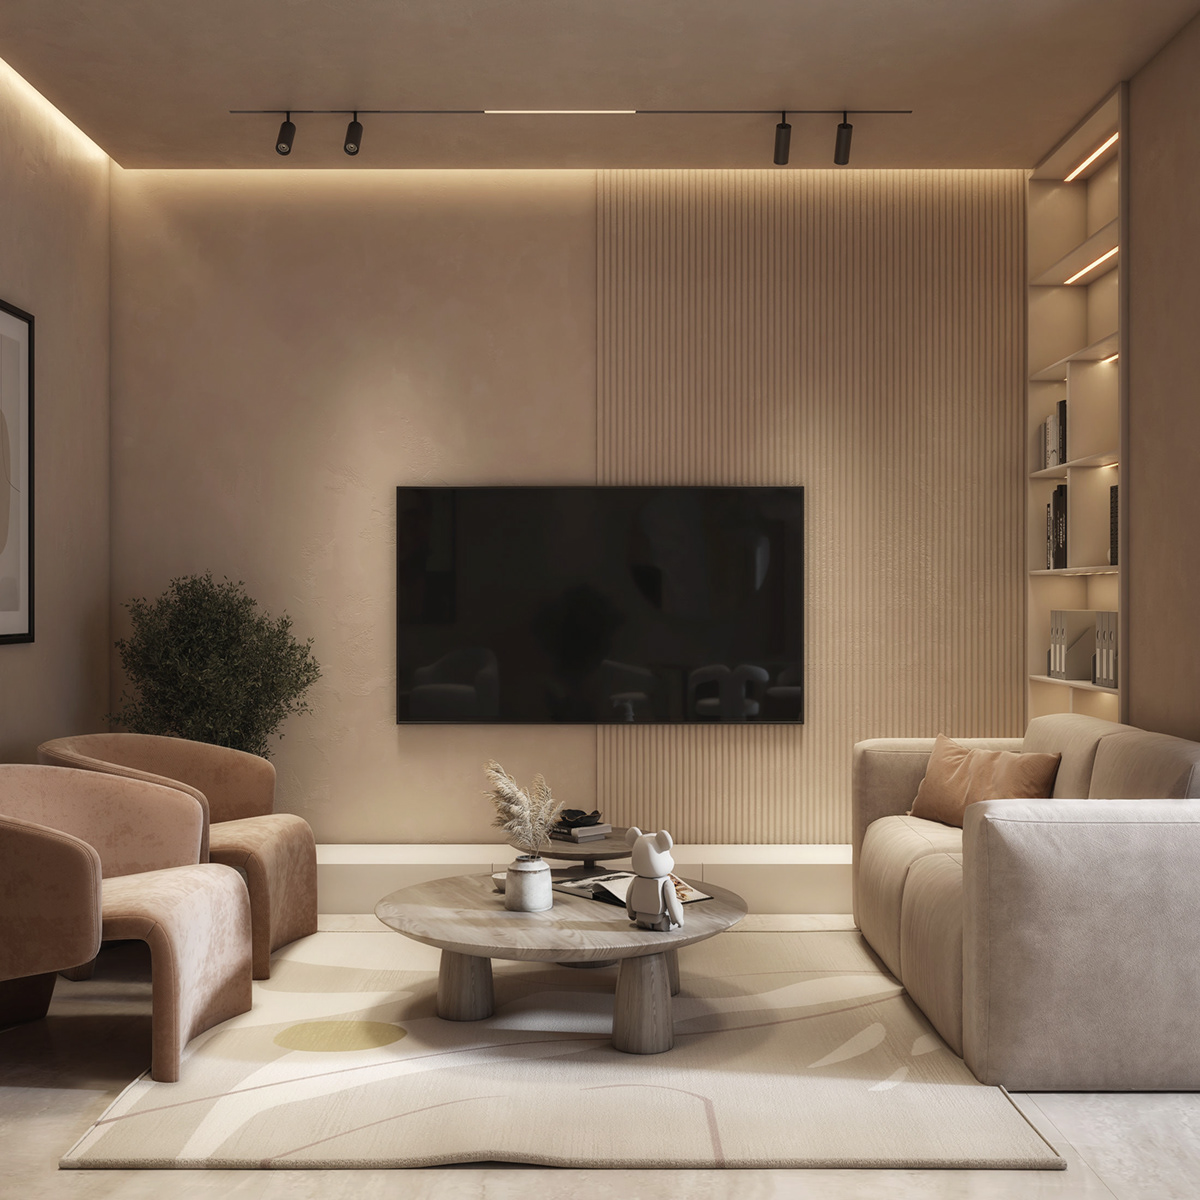 minimal modern interior design  vray living room interiordesign visualization Render CGI 3ds max